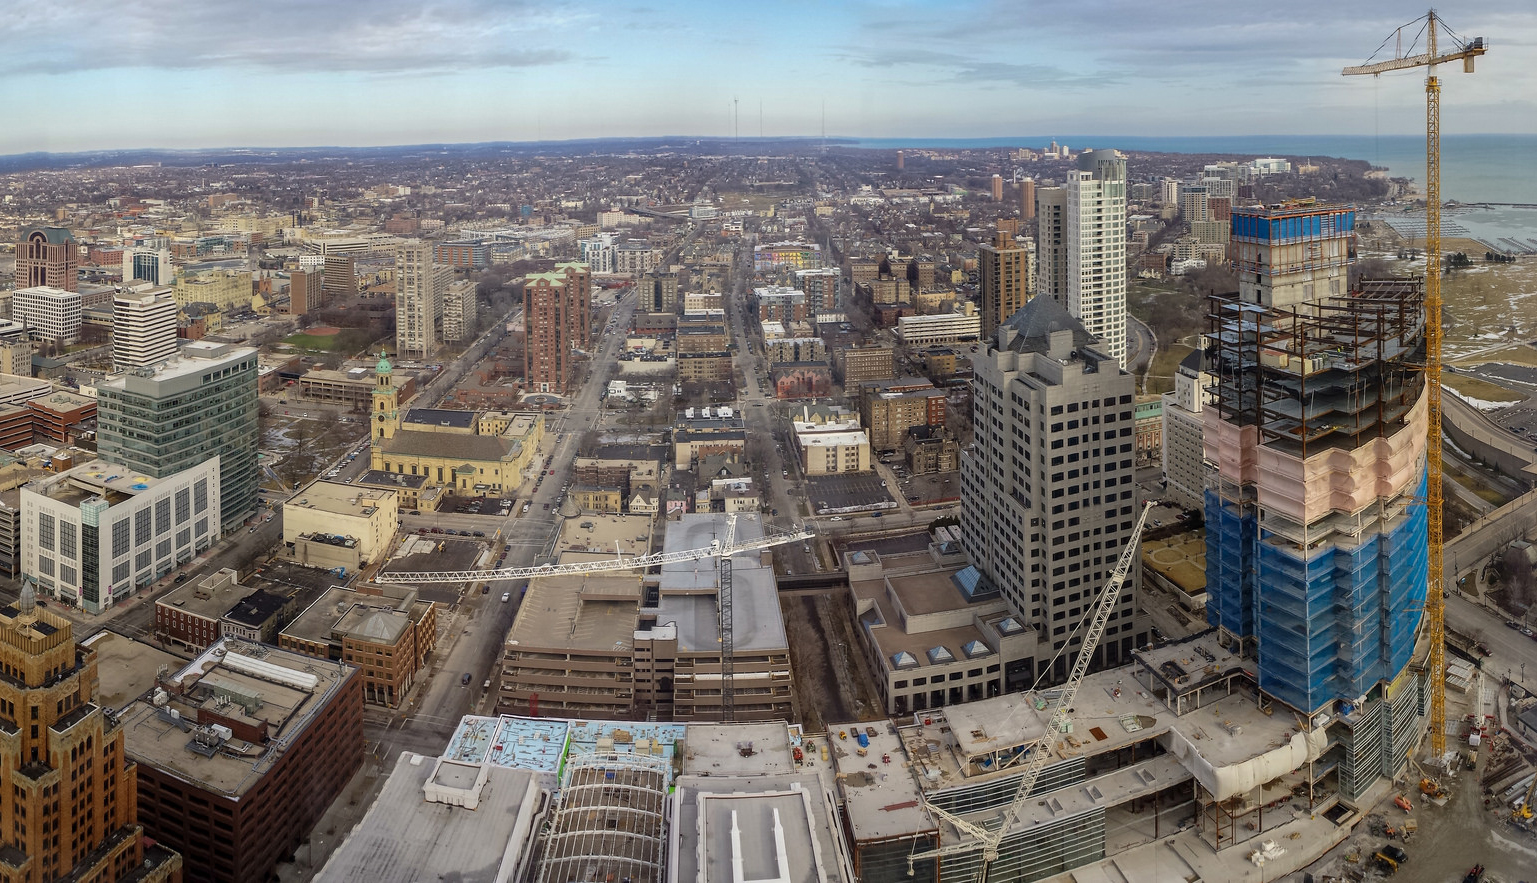 City of Milwaukee skyline